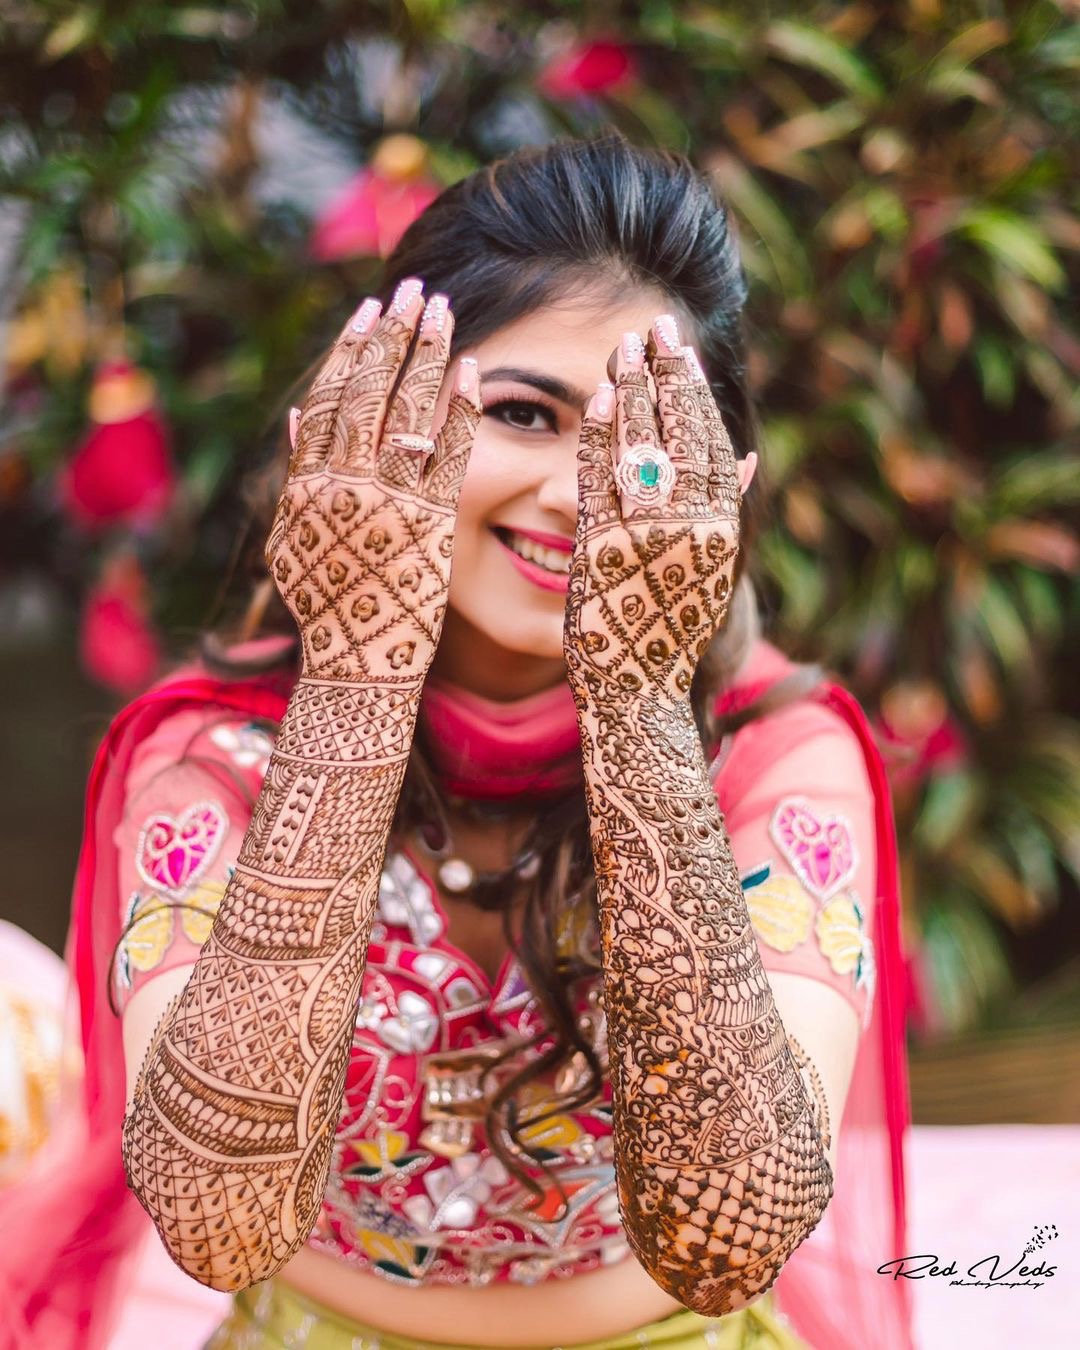 Dalljiet Kaur, Nikhil Patel's Wedding Festivities Begin With Mehendi - See  Pics